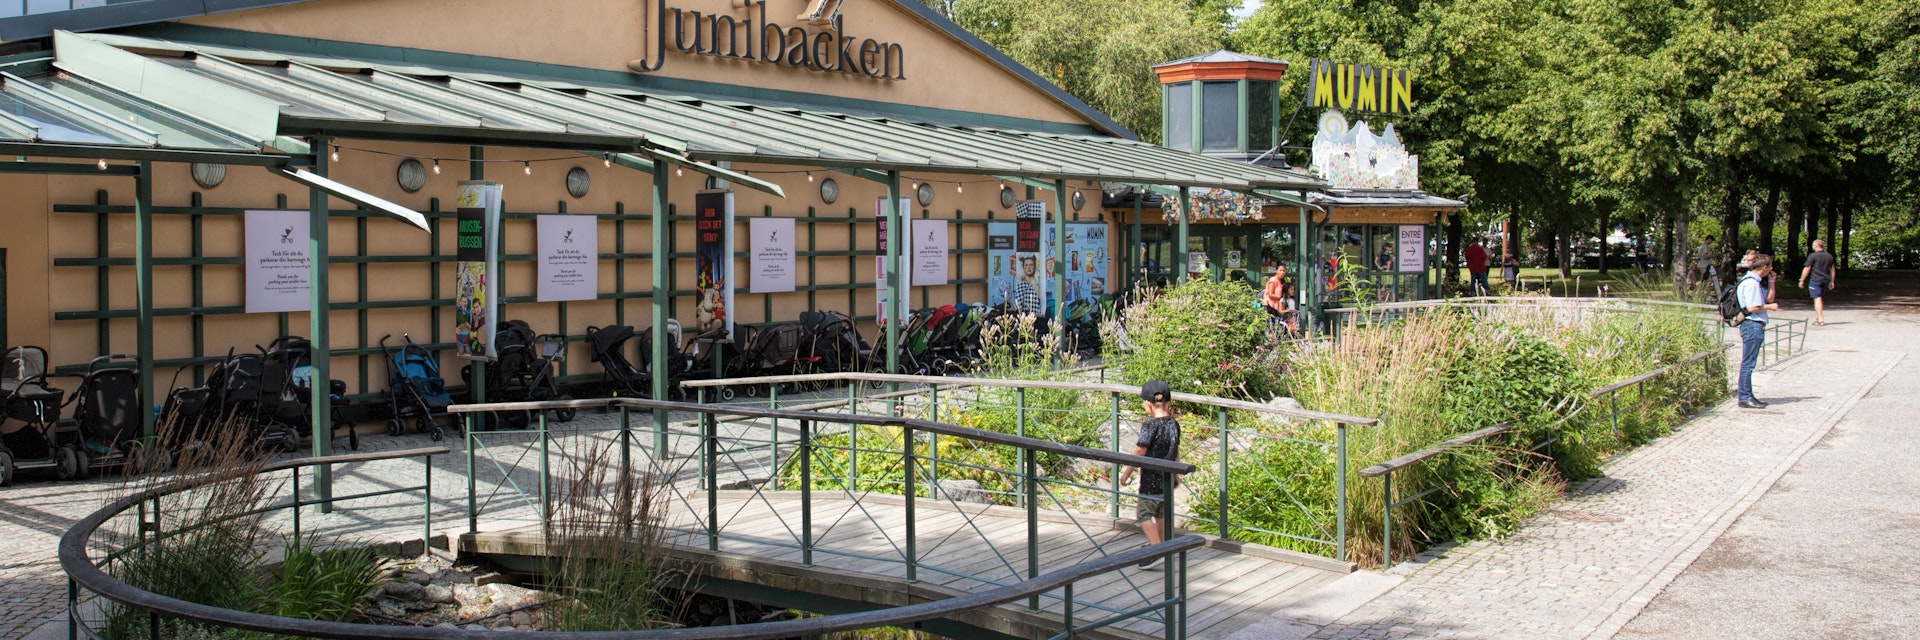 Entrance to Junibacken in Stockholm.